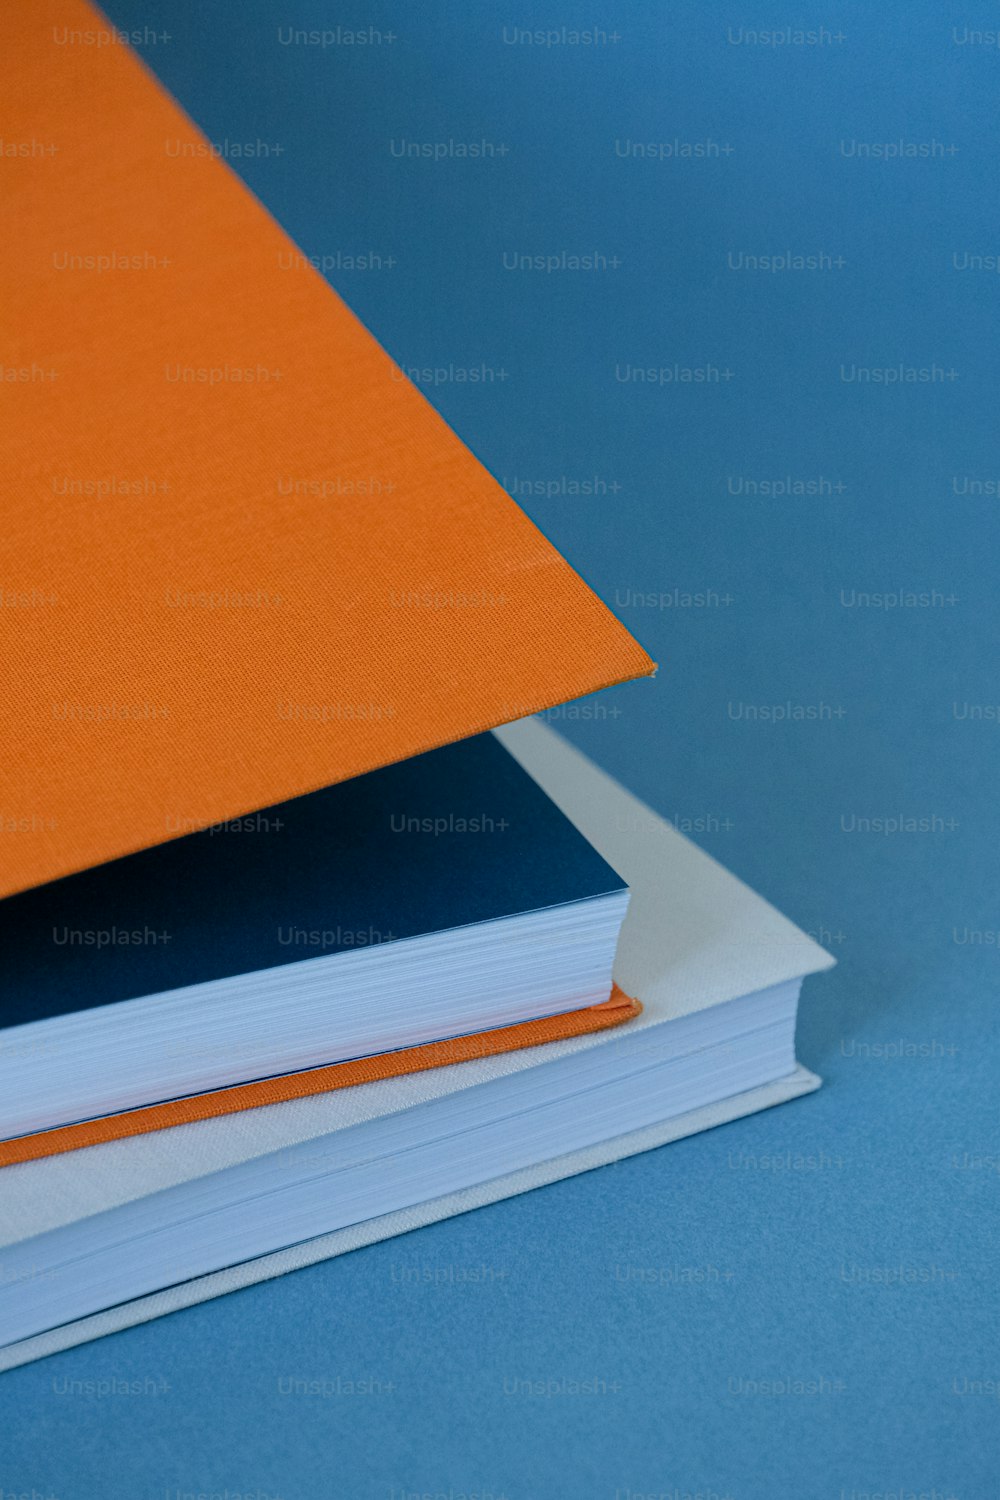 blue and orange book stack